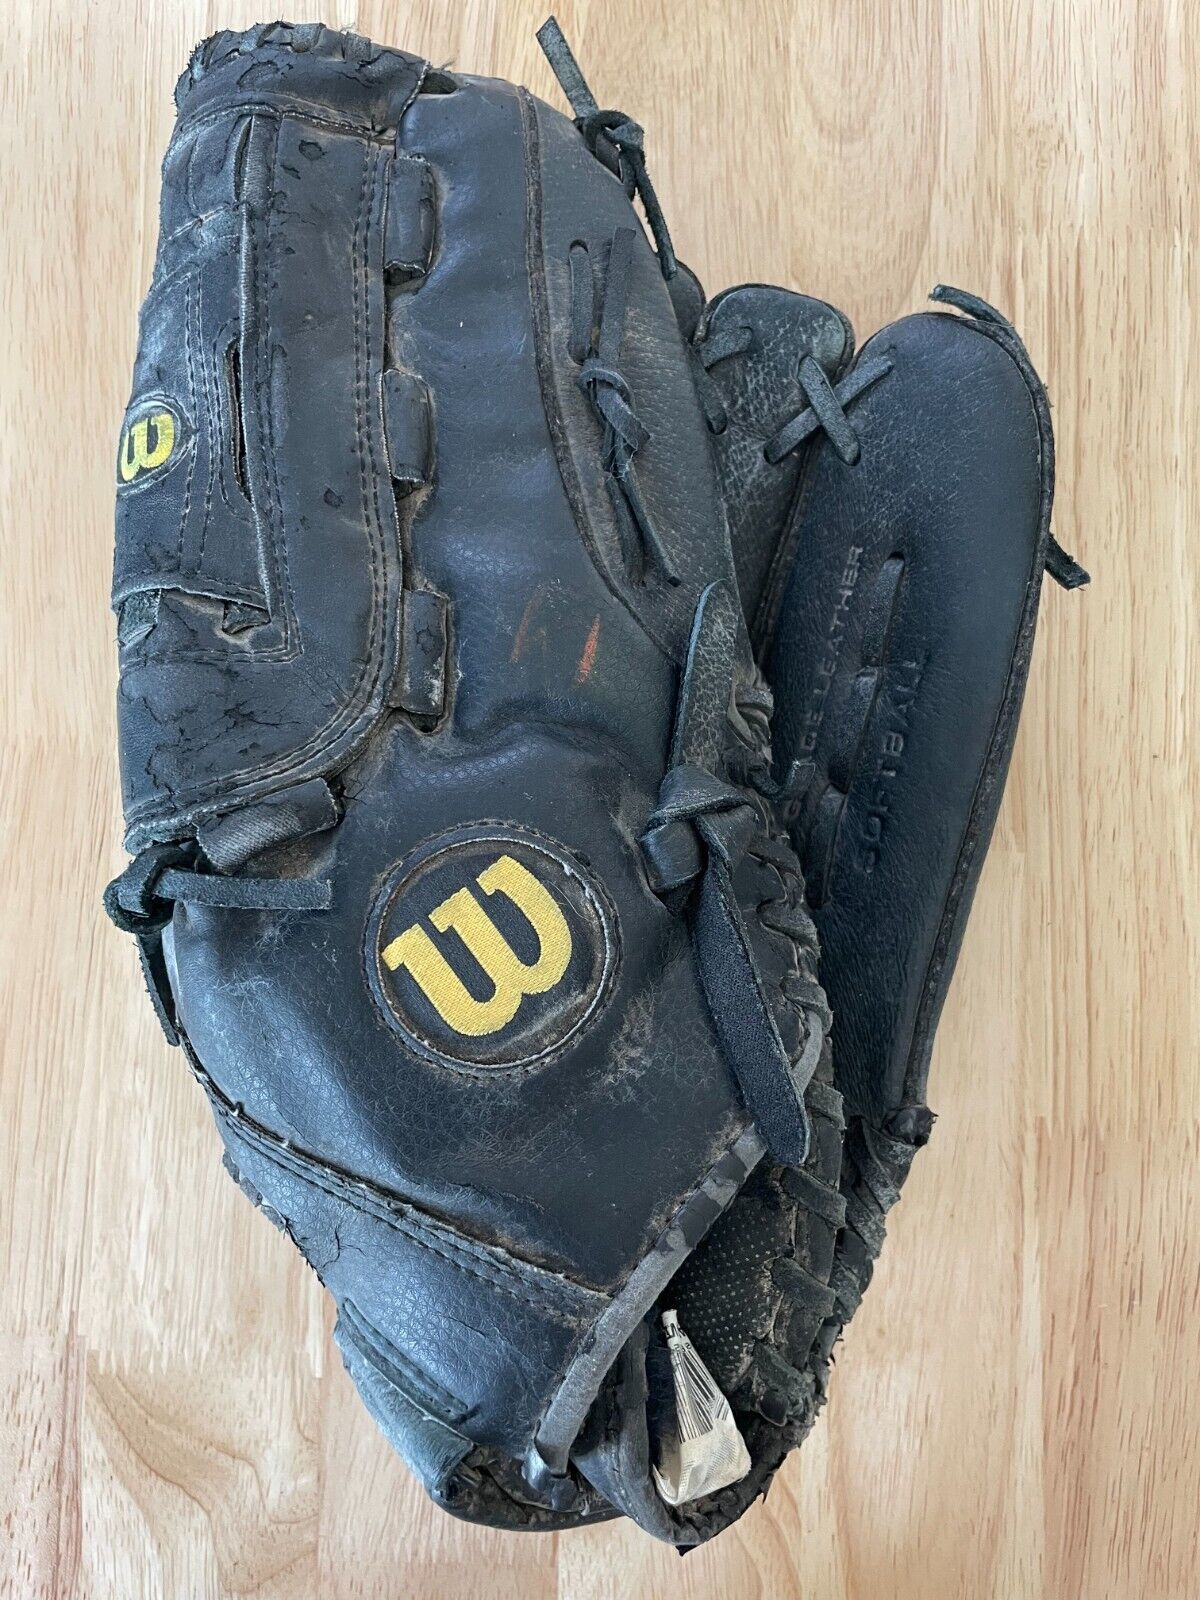 Wilson 14" A2444 Black Leather Elite Softball Glove Over Sized Pocket RHT - $31.49